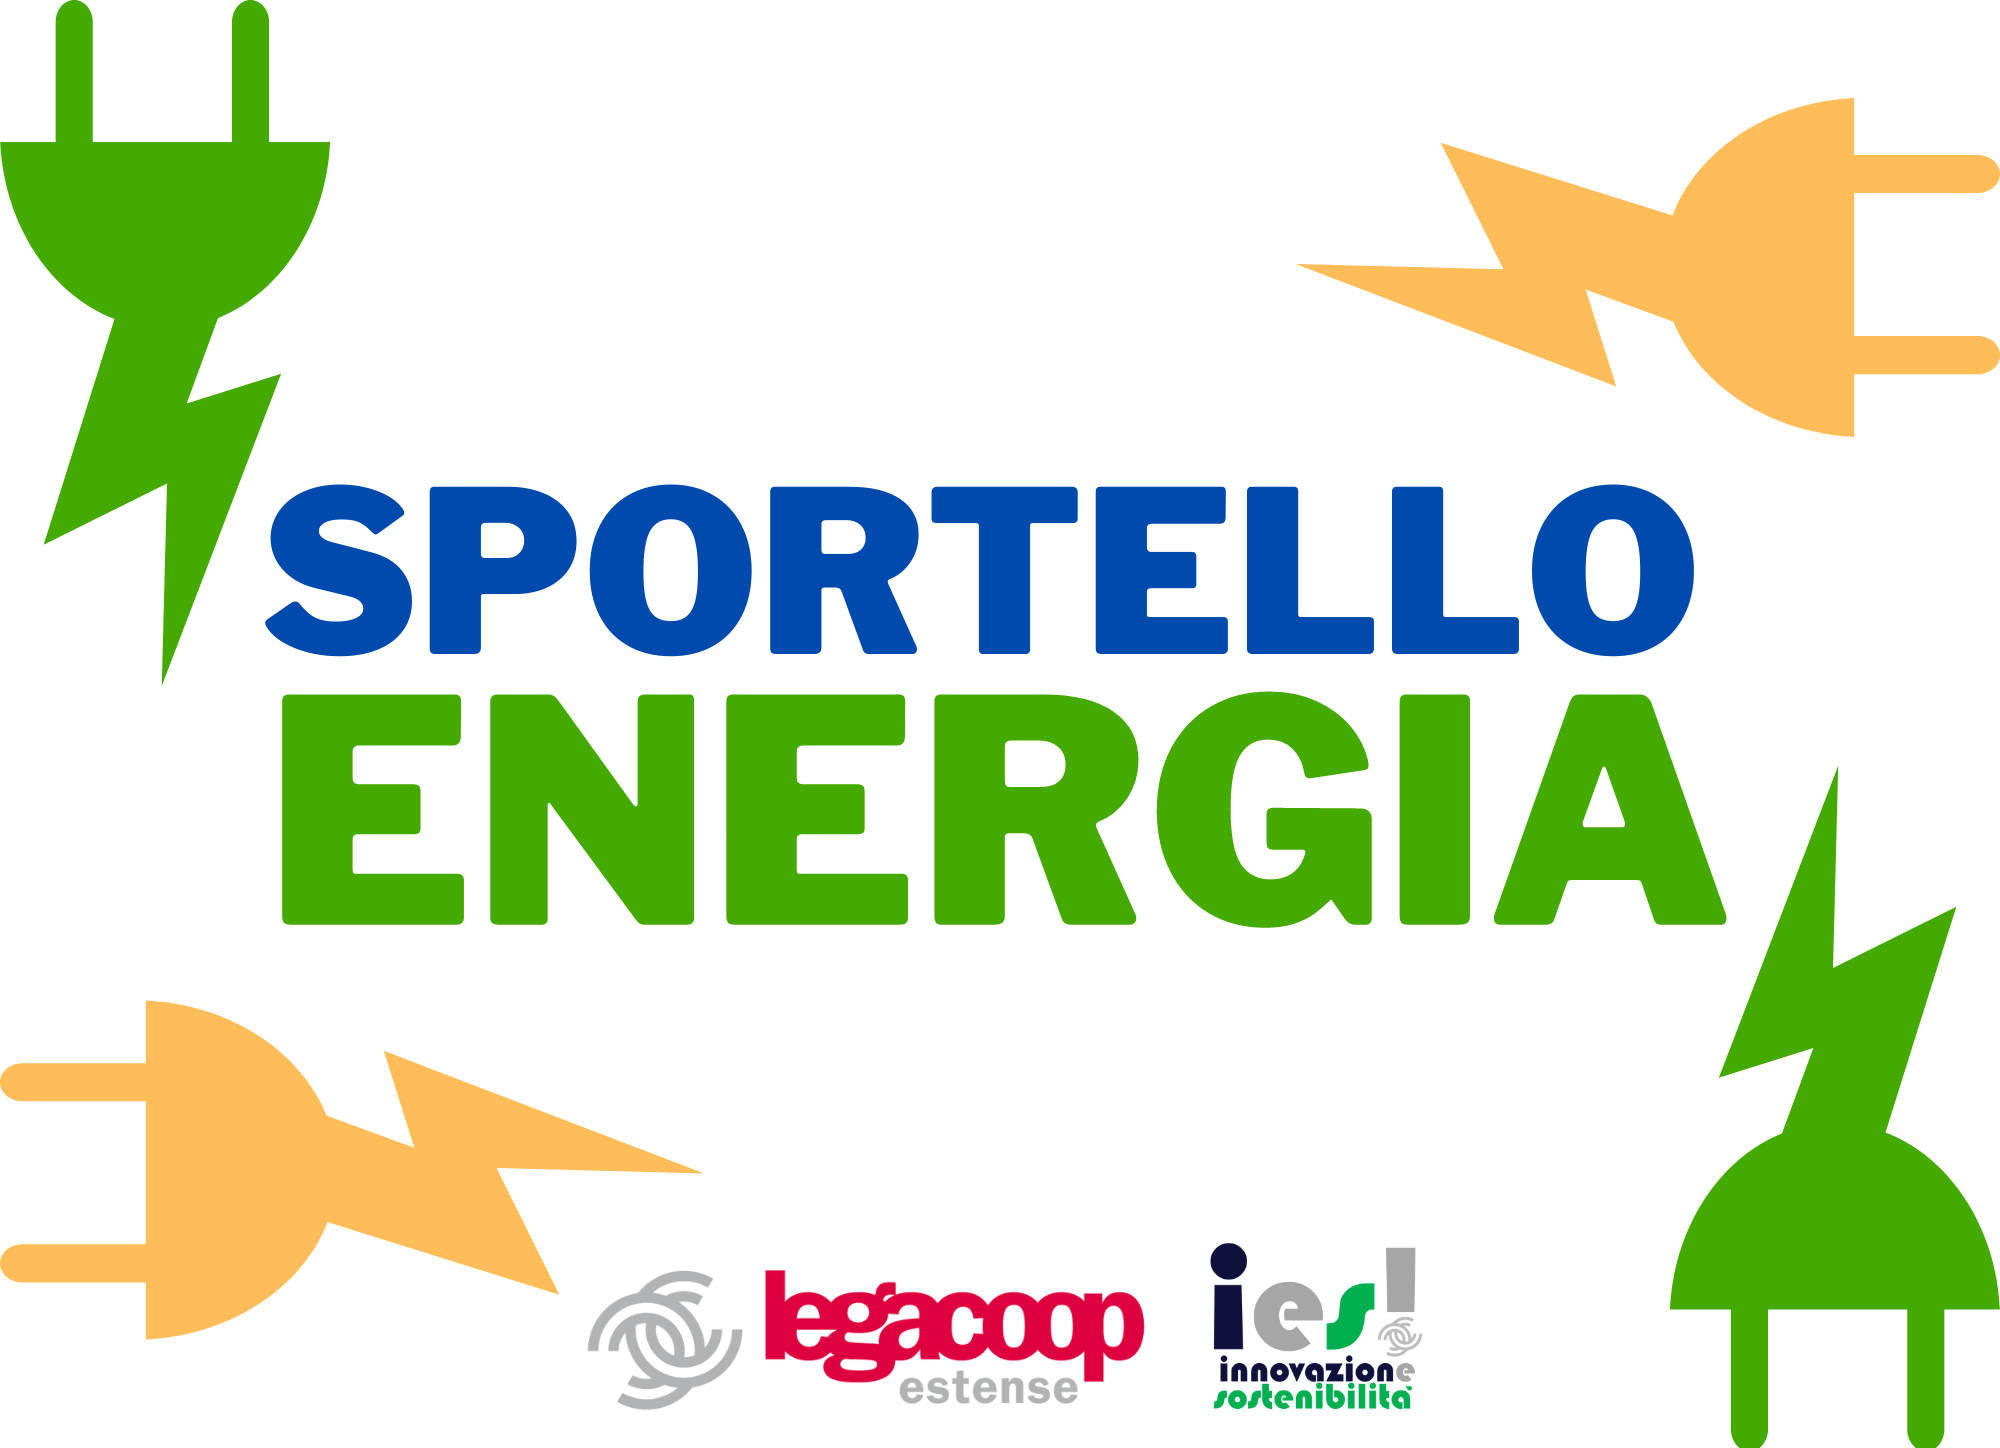 Nasce lo Sportello Energia di Legacoop Estense